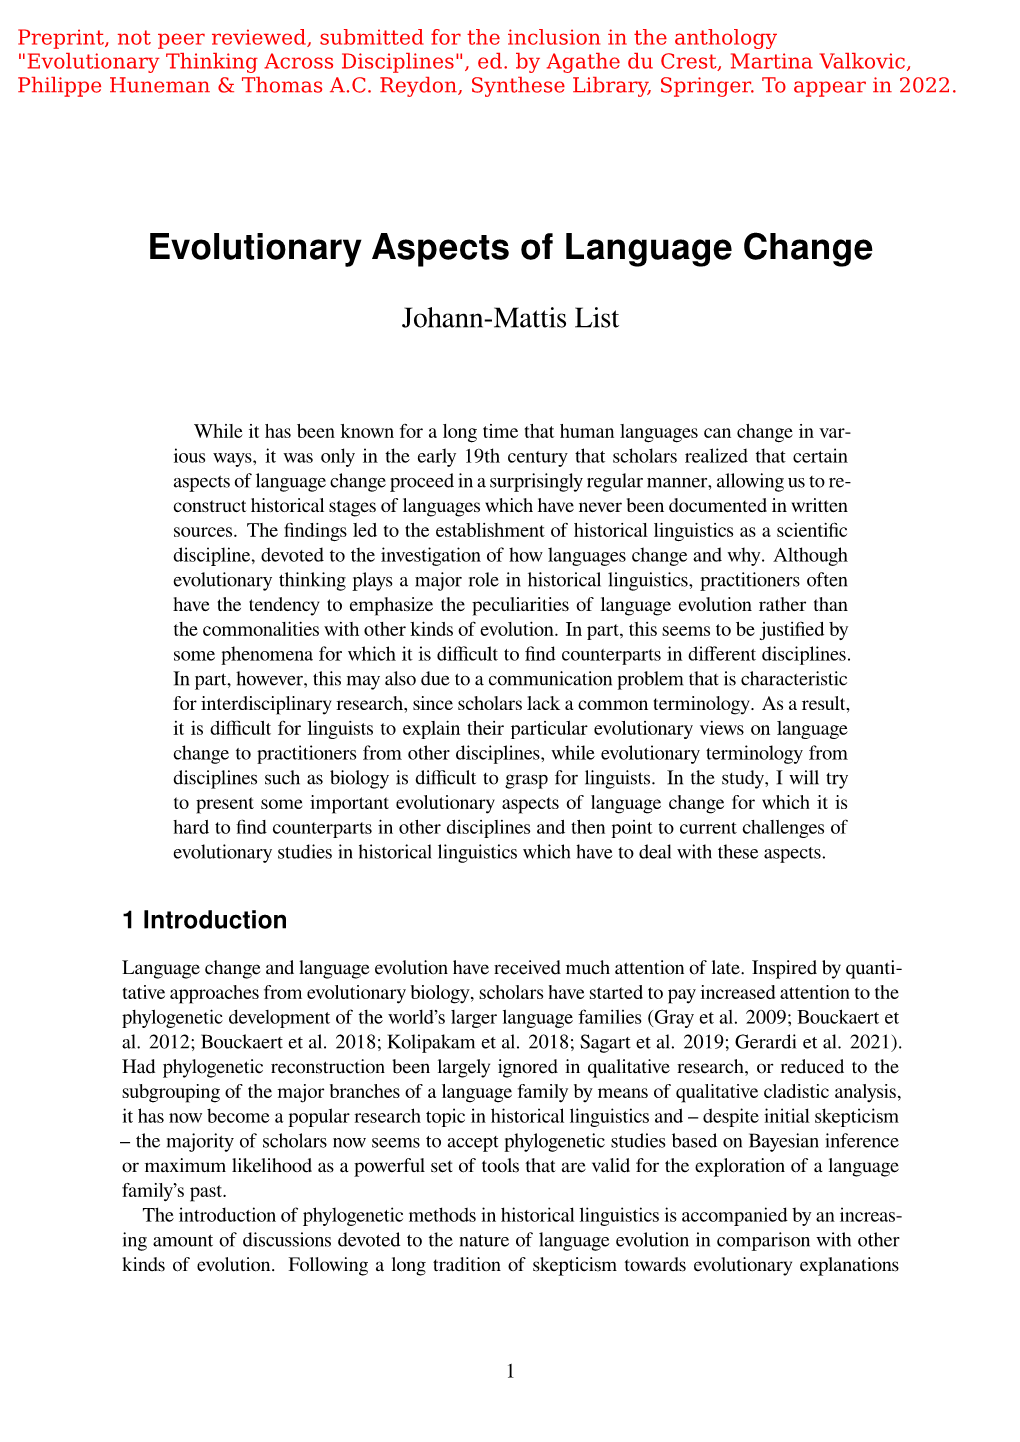 Evolutionary Aspects of Language Change